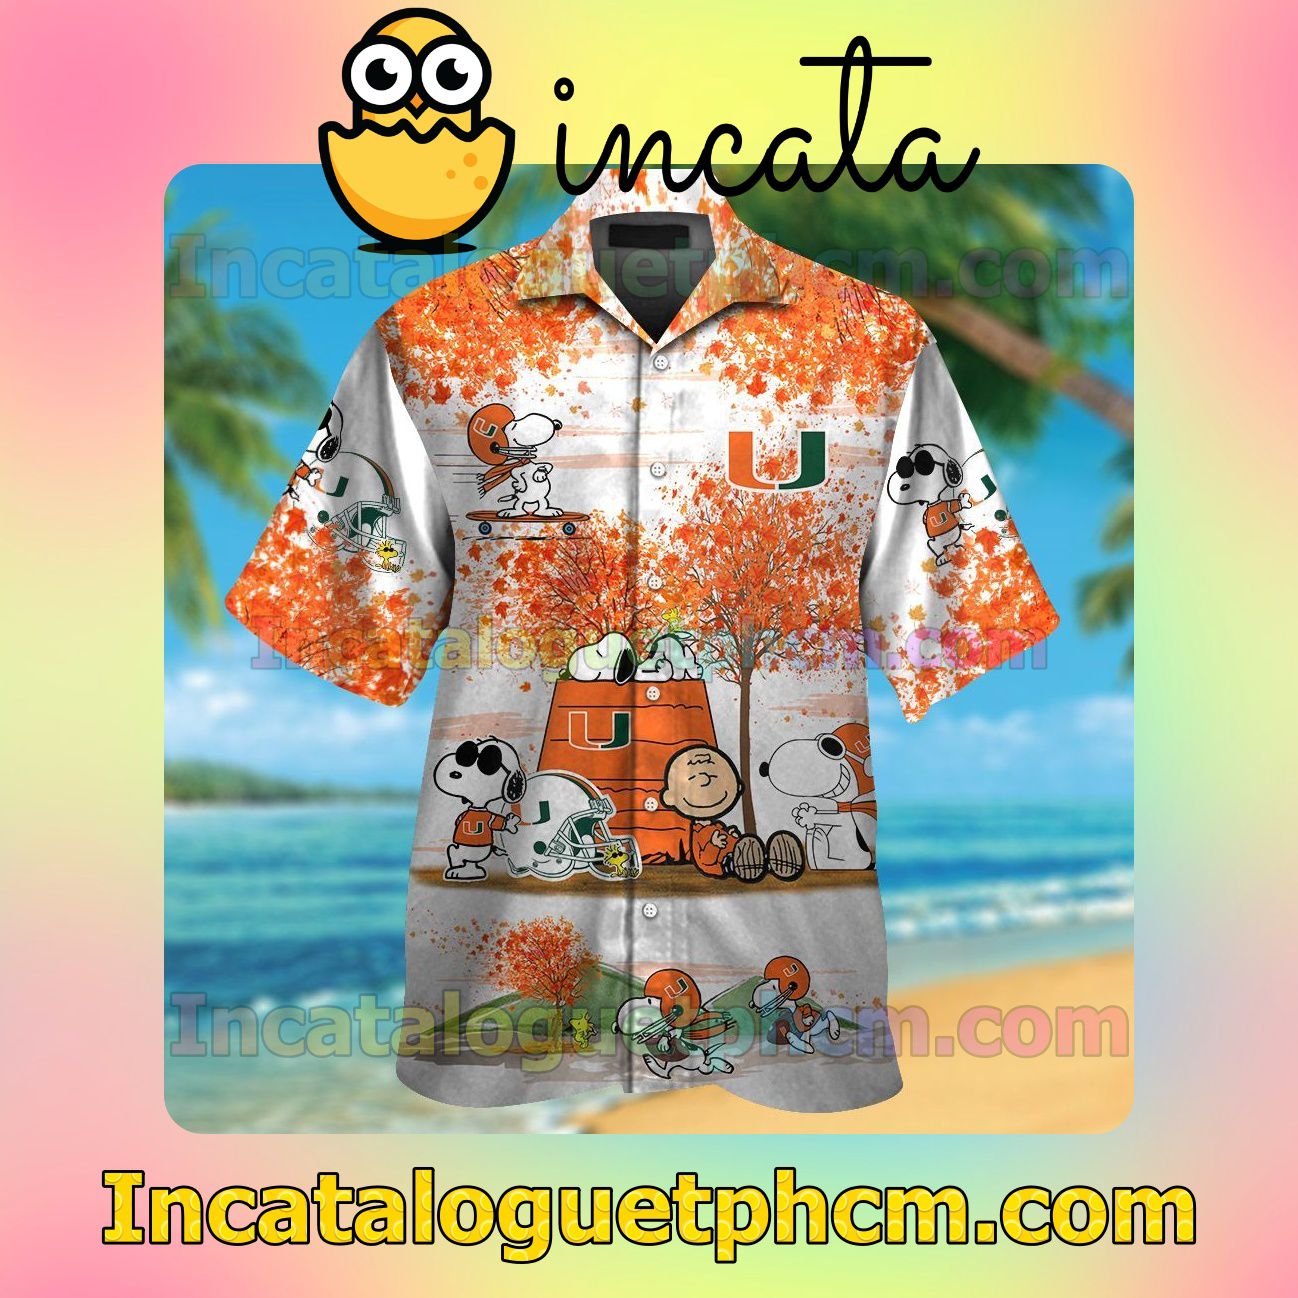 Miami Hurricanes Snoopy Autumn Beach Vacation Shirt, Swim Shorts